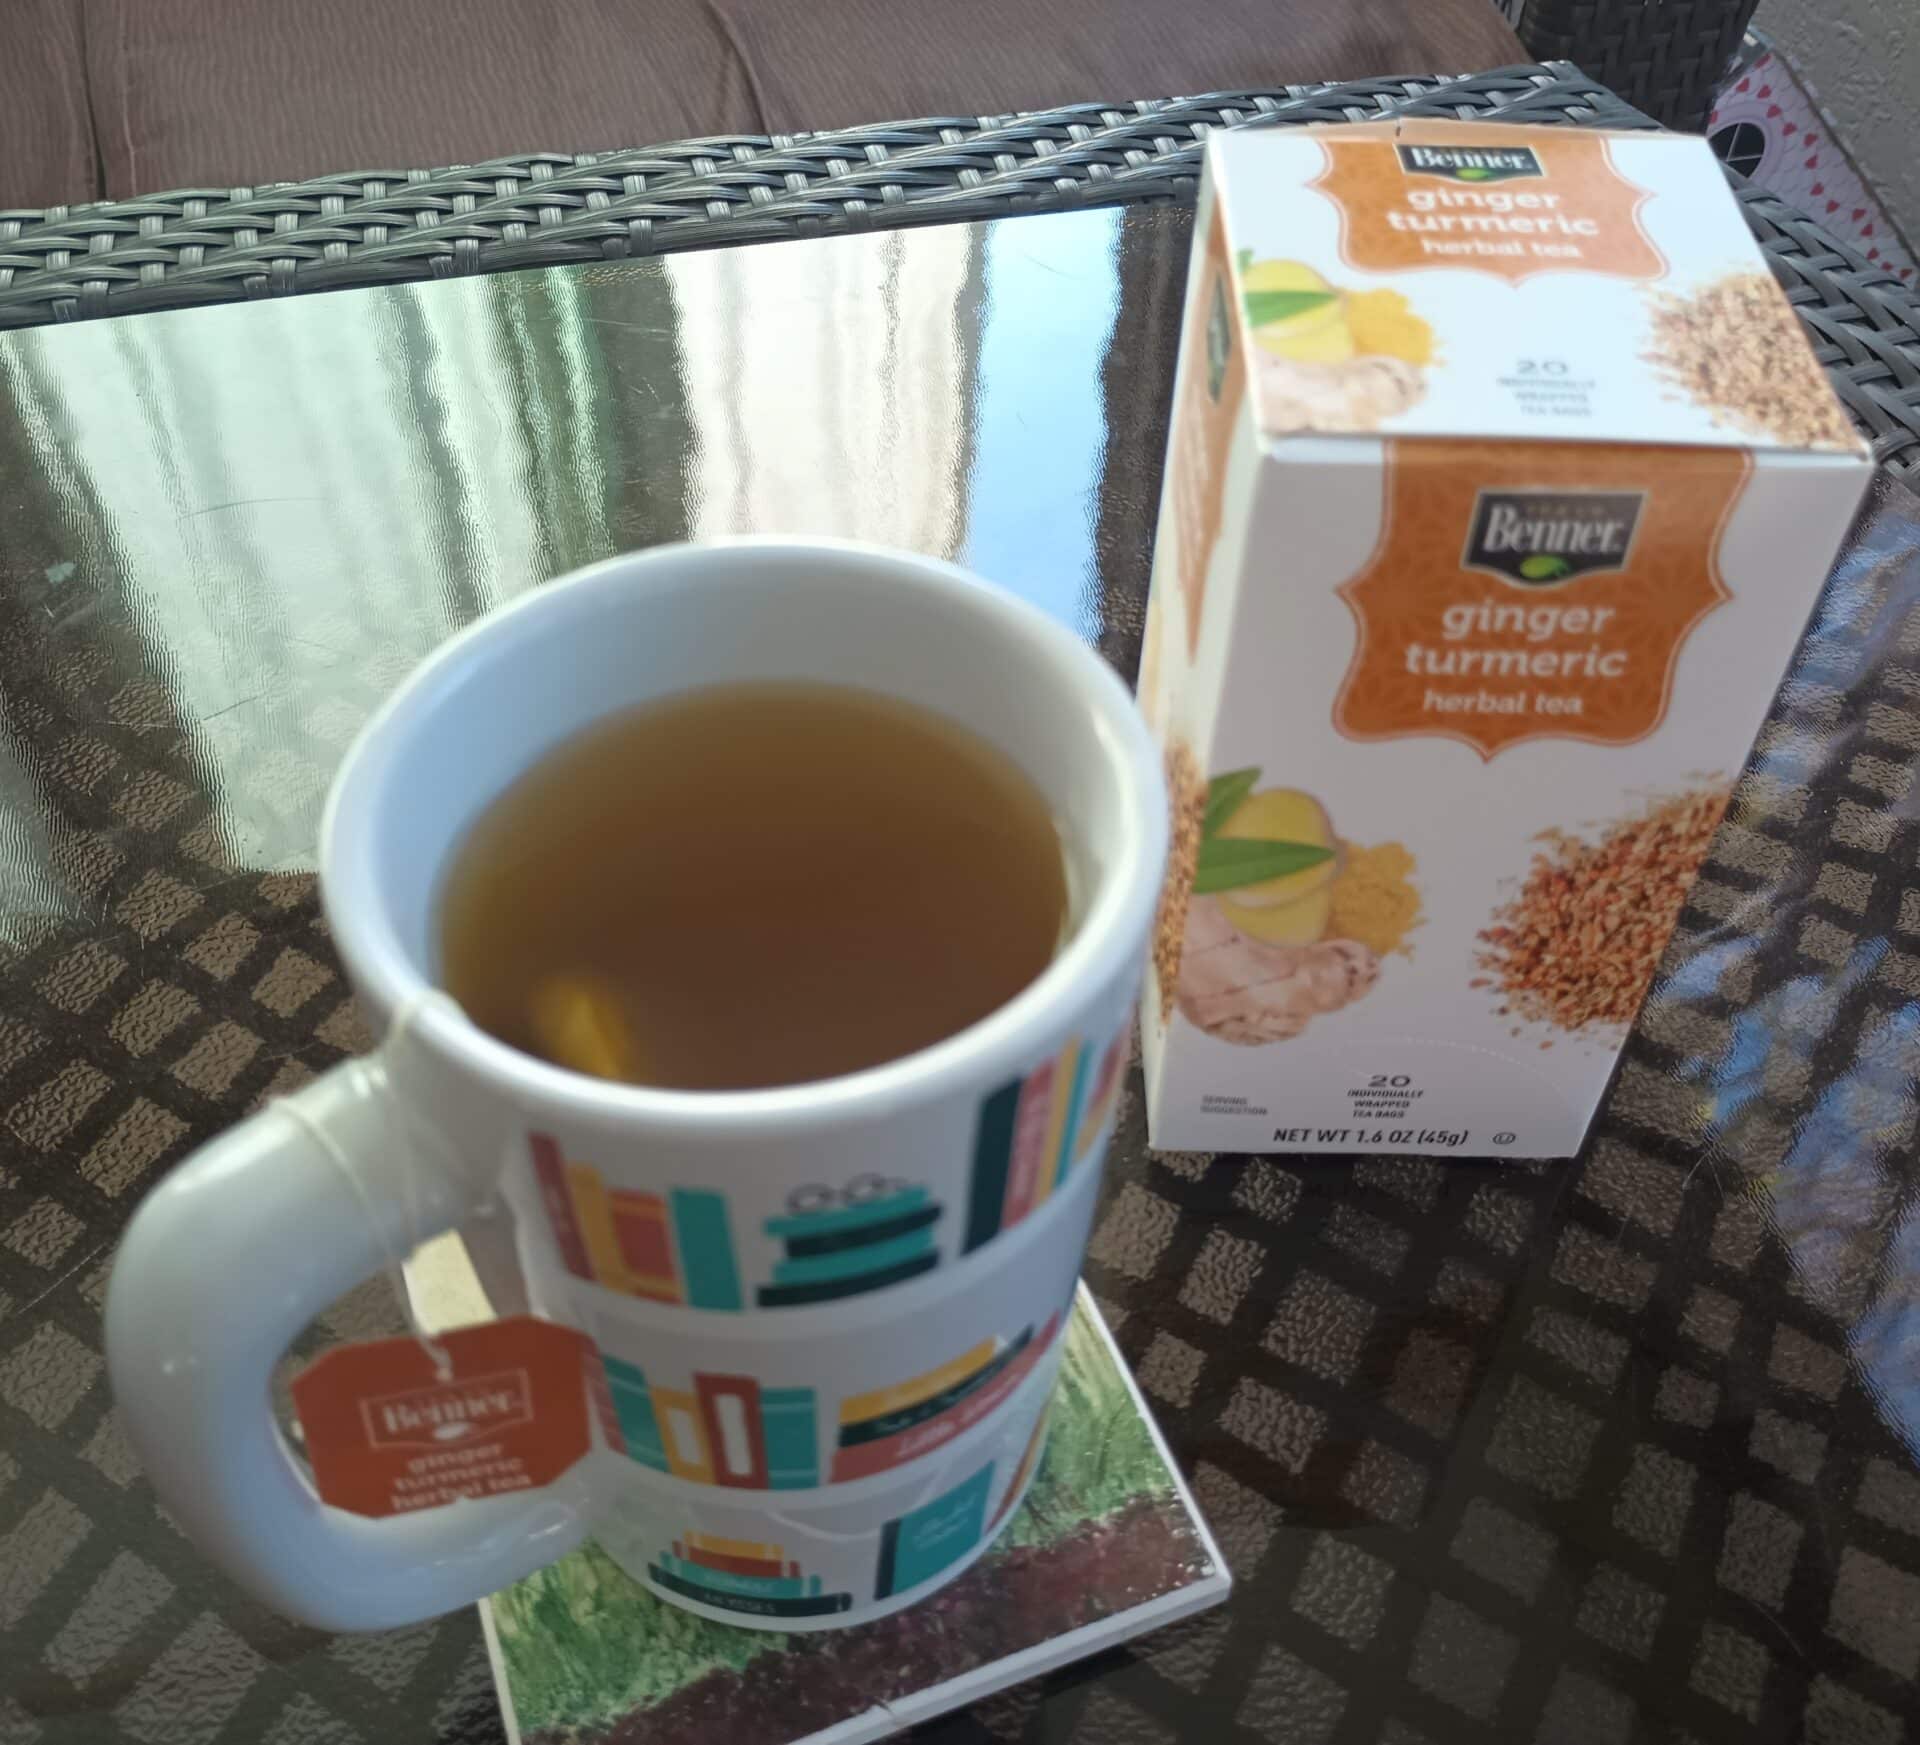 Ginger Drink, Tea Packets, Pickwick Joy Of Tea Ginger Spices Herbal Tea, Ginger Lemon Tea